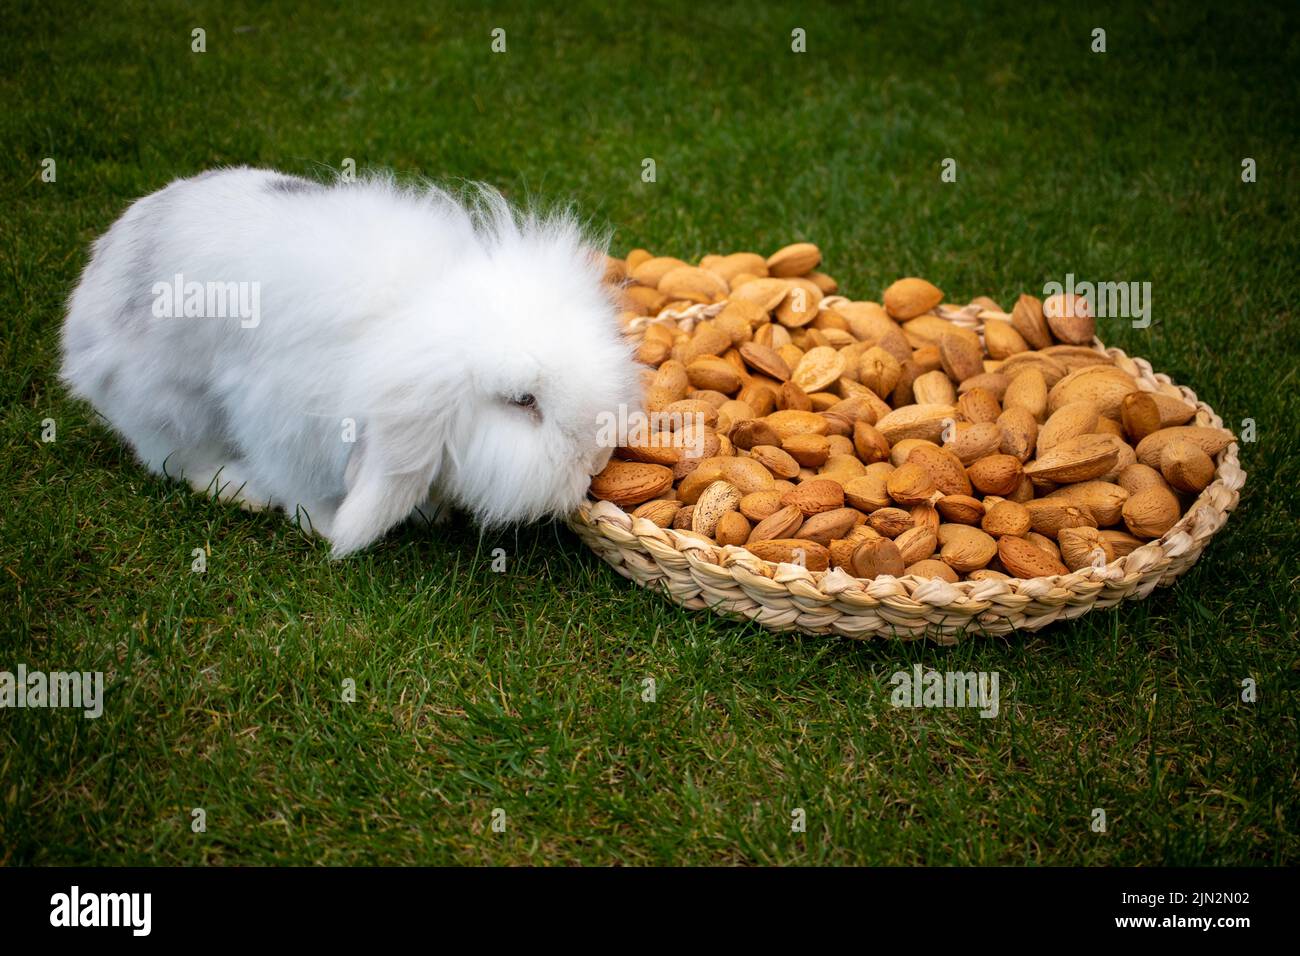 Un conejo mini lop olfatea almendras con cáscara de una bandeja de mimbre sobre el césped Stock Photo